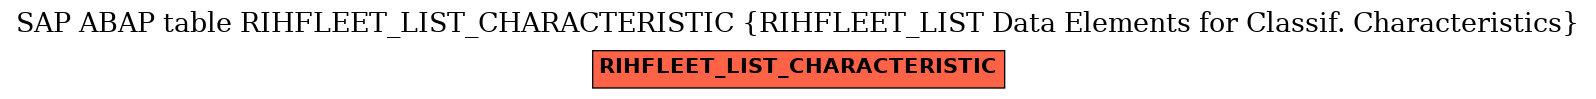 E-R Diagram for table RIHFLEET_LIST_CHARACTERISTIC (RIHFLEET_LIST Data Elements for Classif. Characteristics)